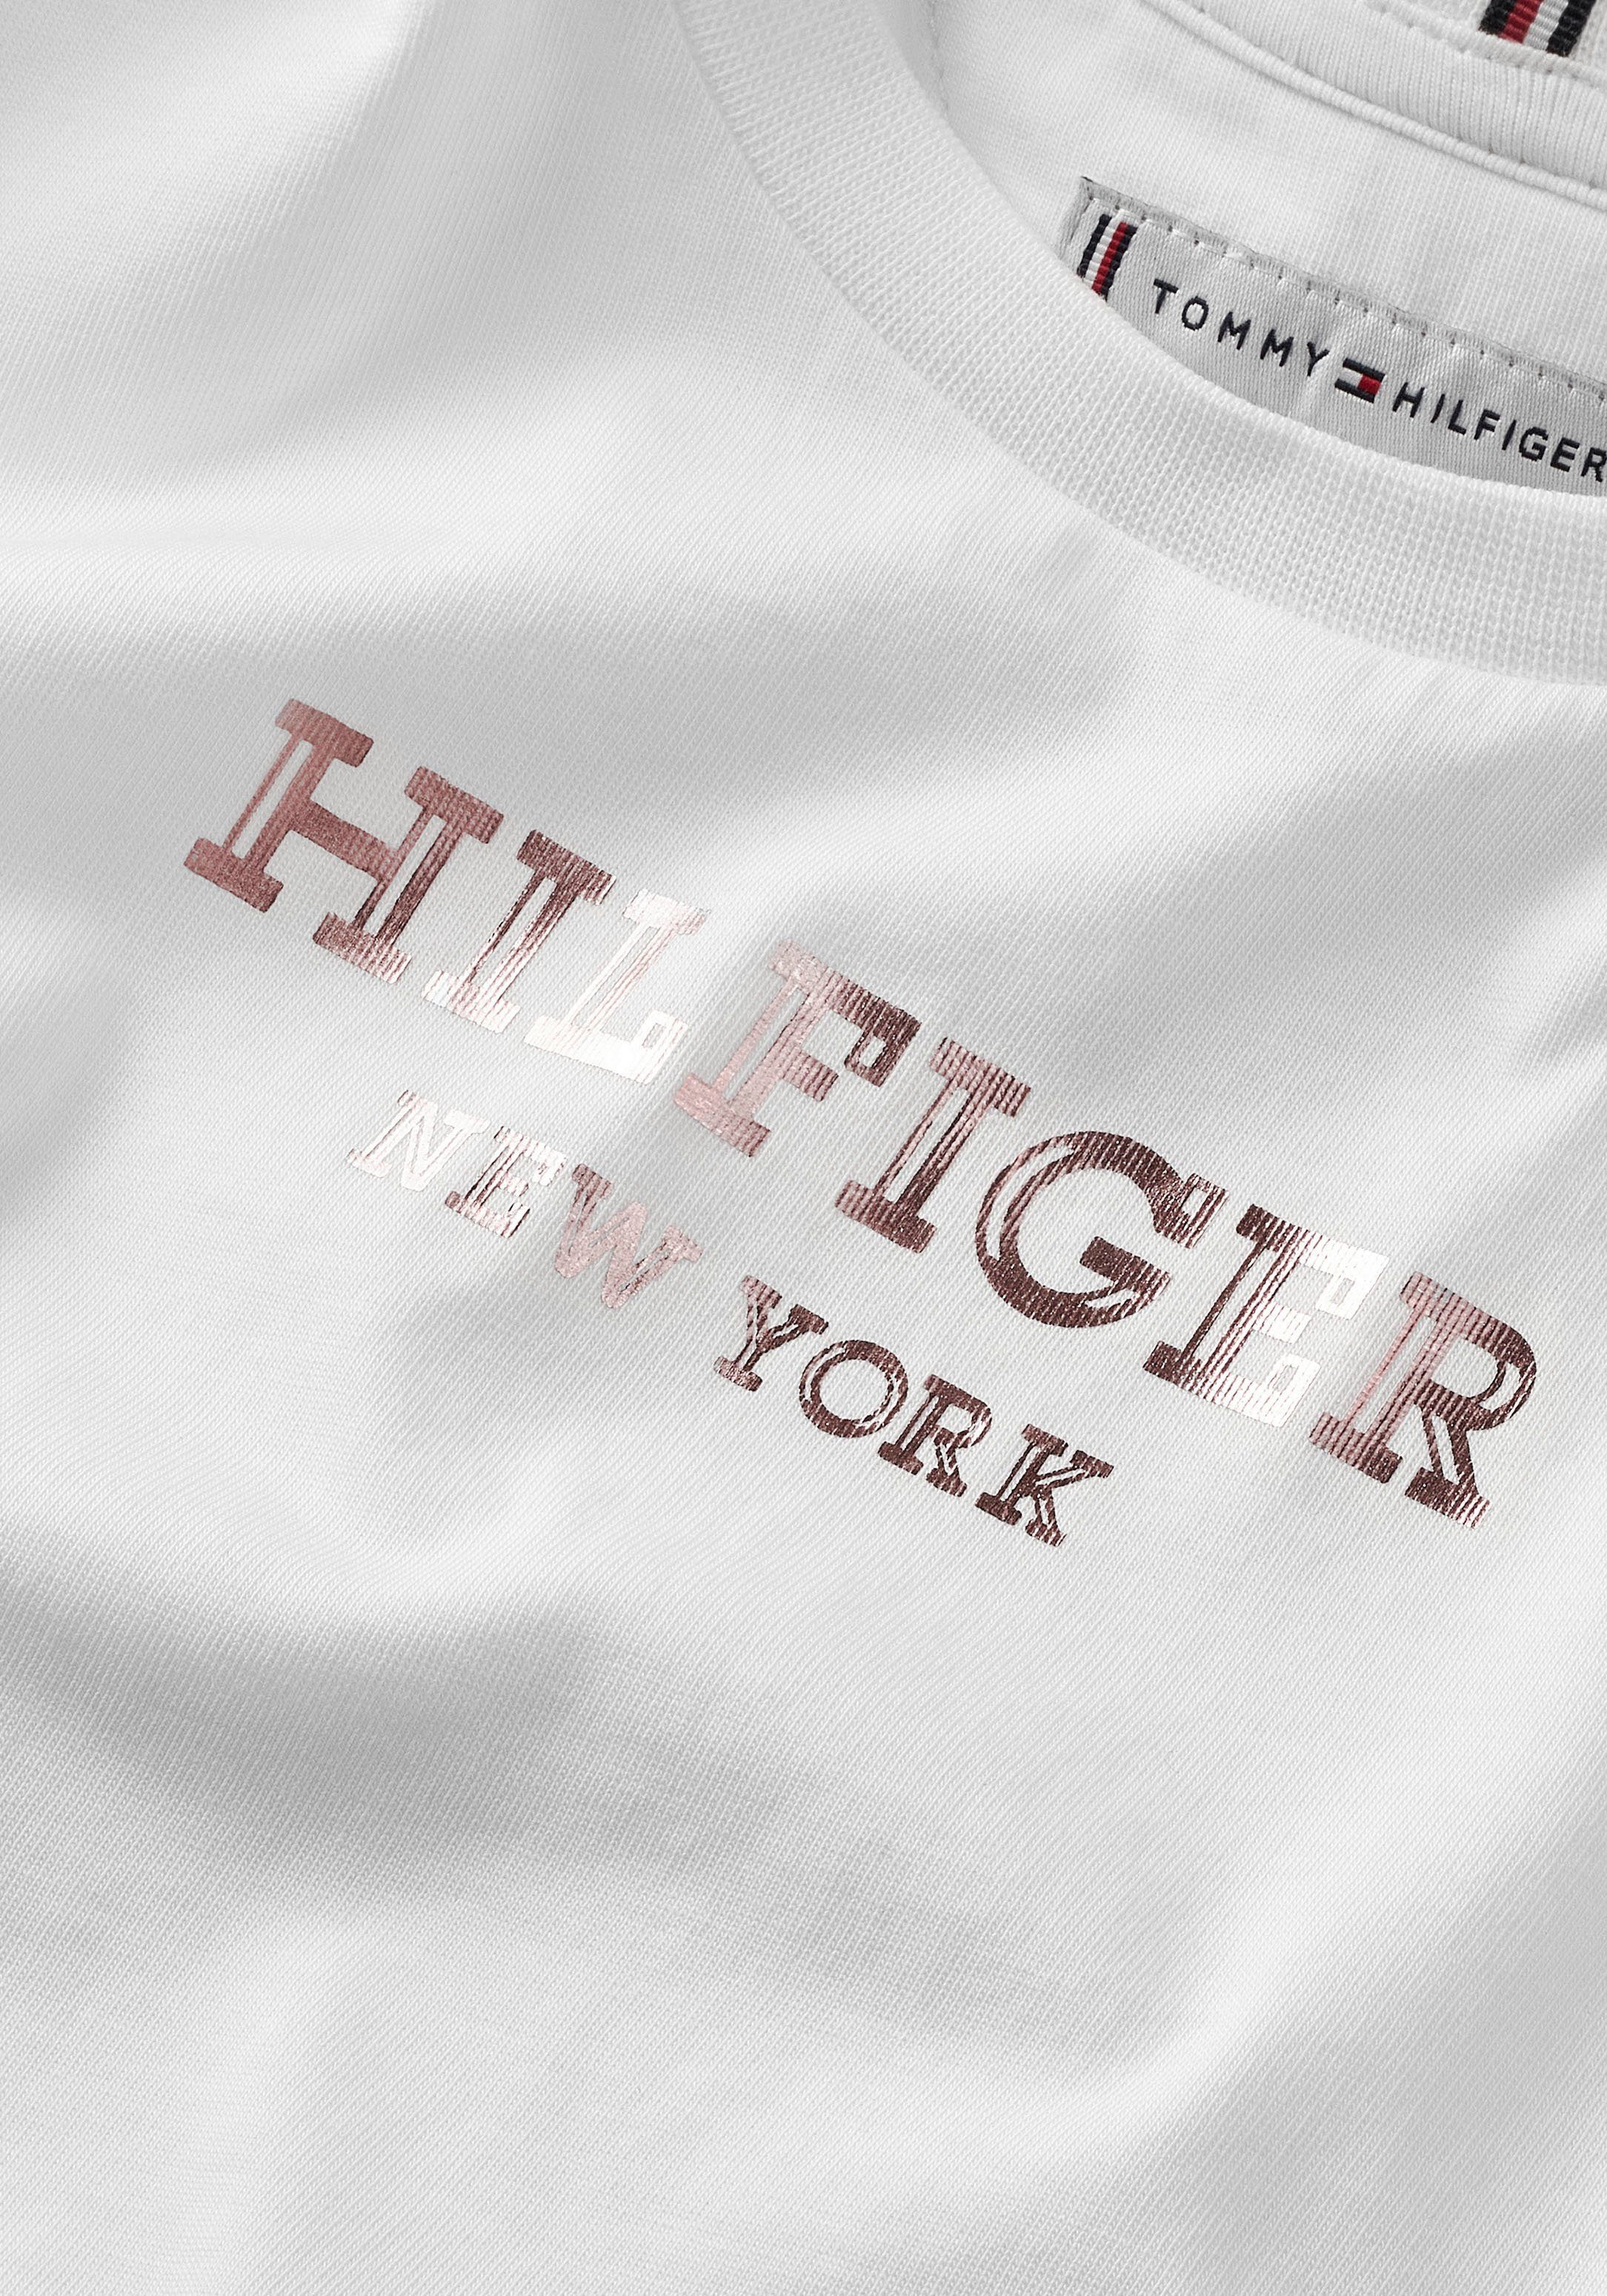 MONOTYPE Folienprint T-Shirt white mit PRINT TEE Hilfiger Tommy S/S FOIL